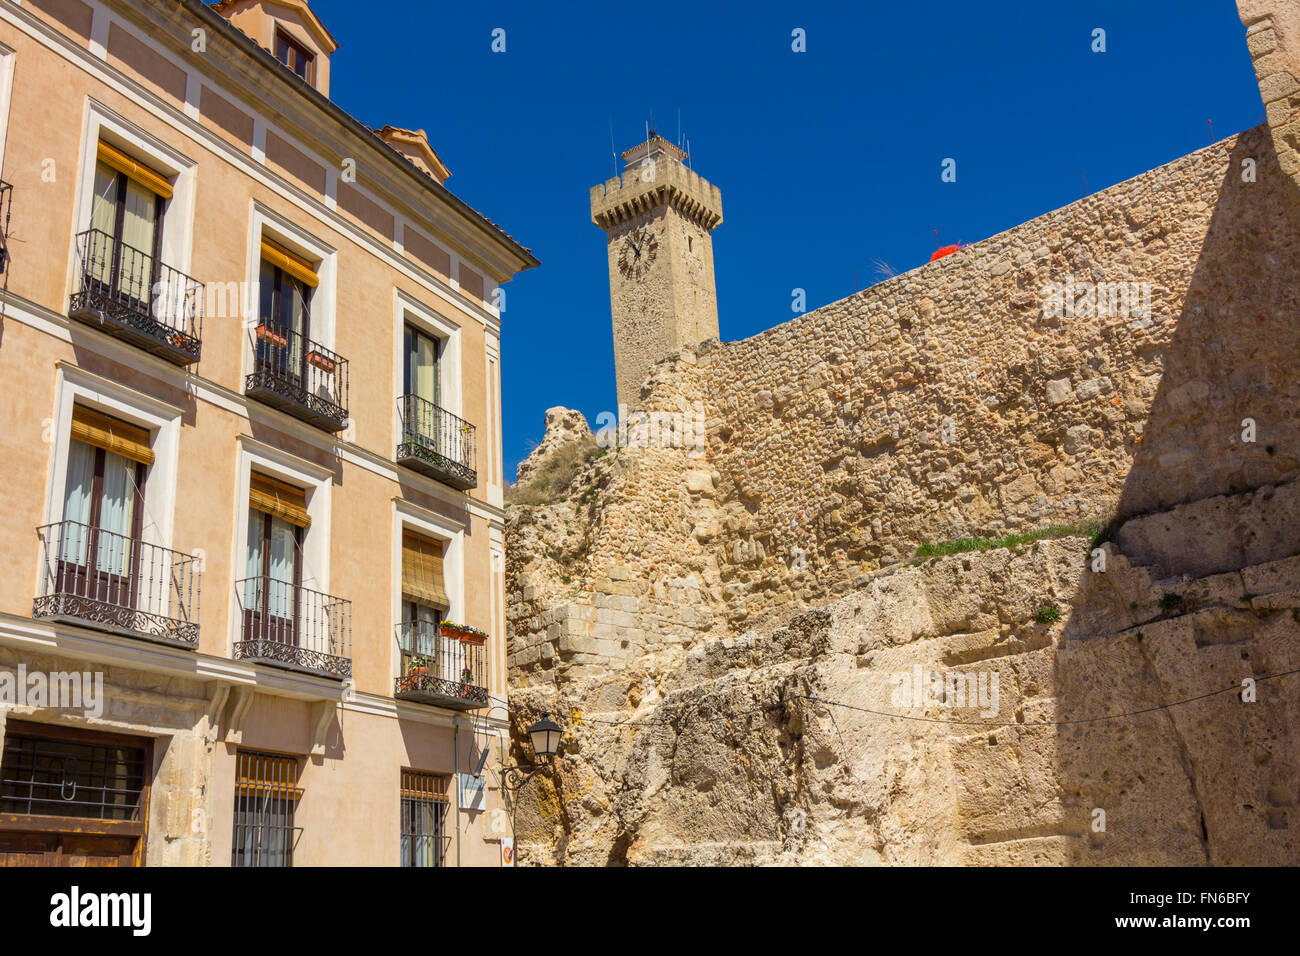 Mañana torre nella città di Cuenca, Spagna Foto Stock